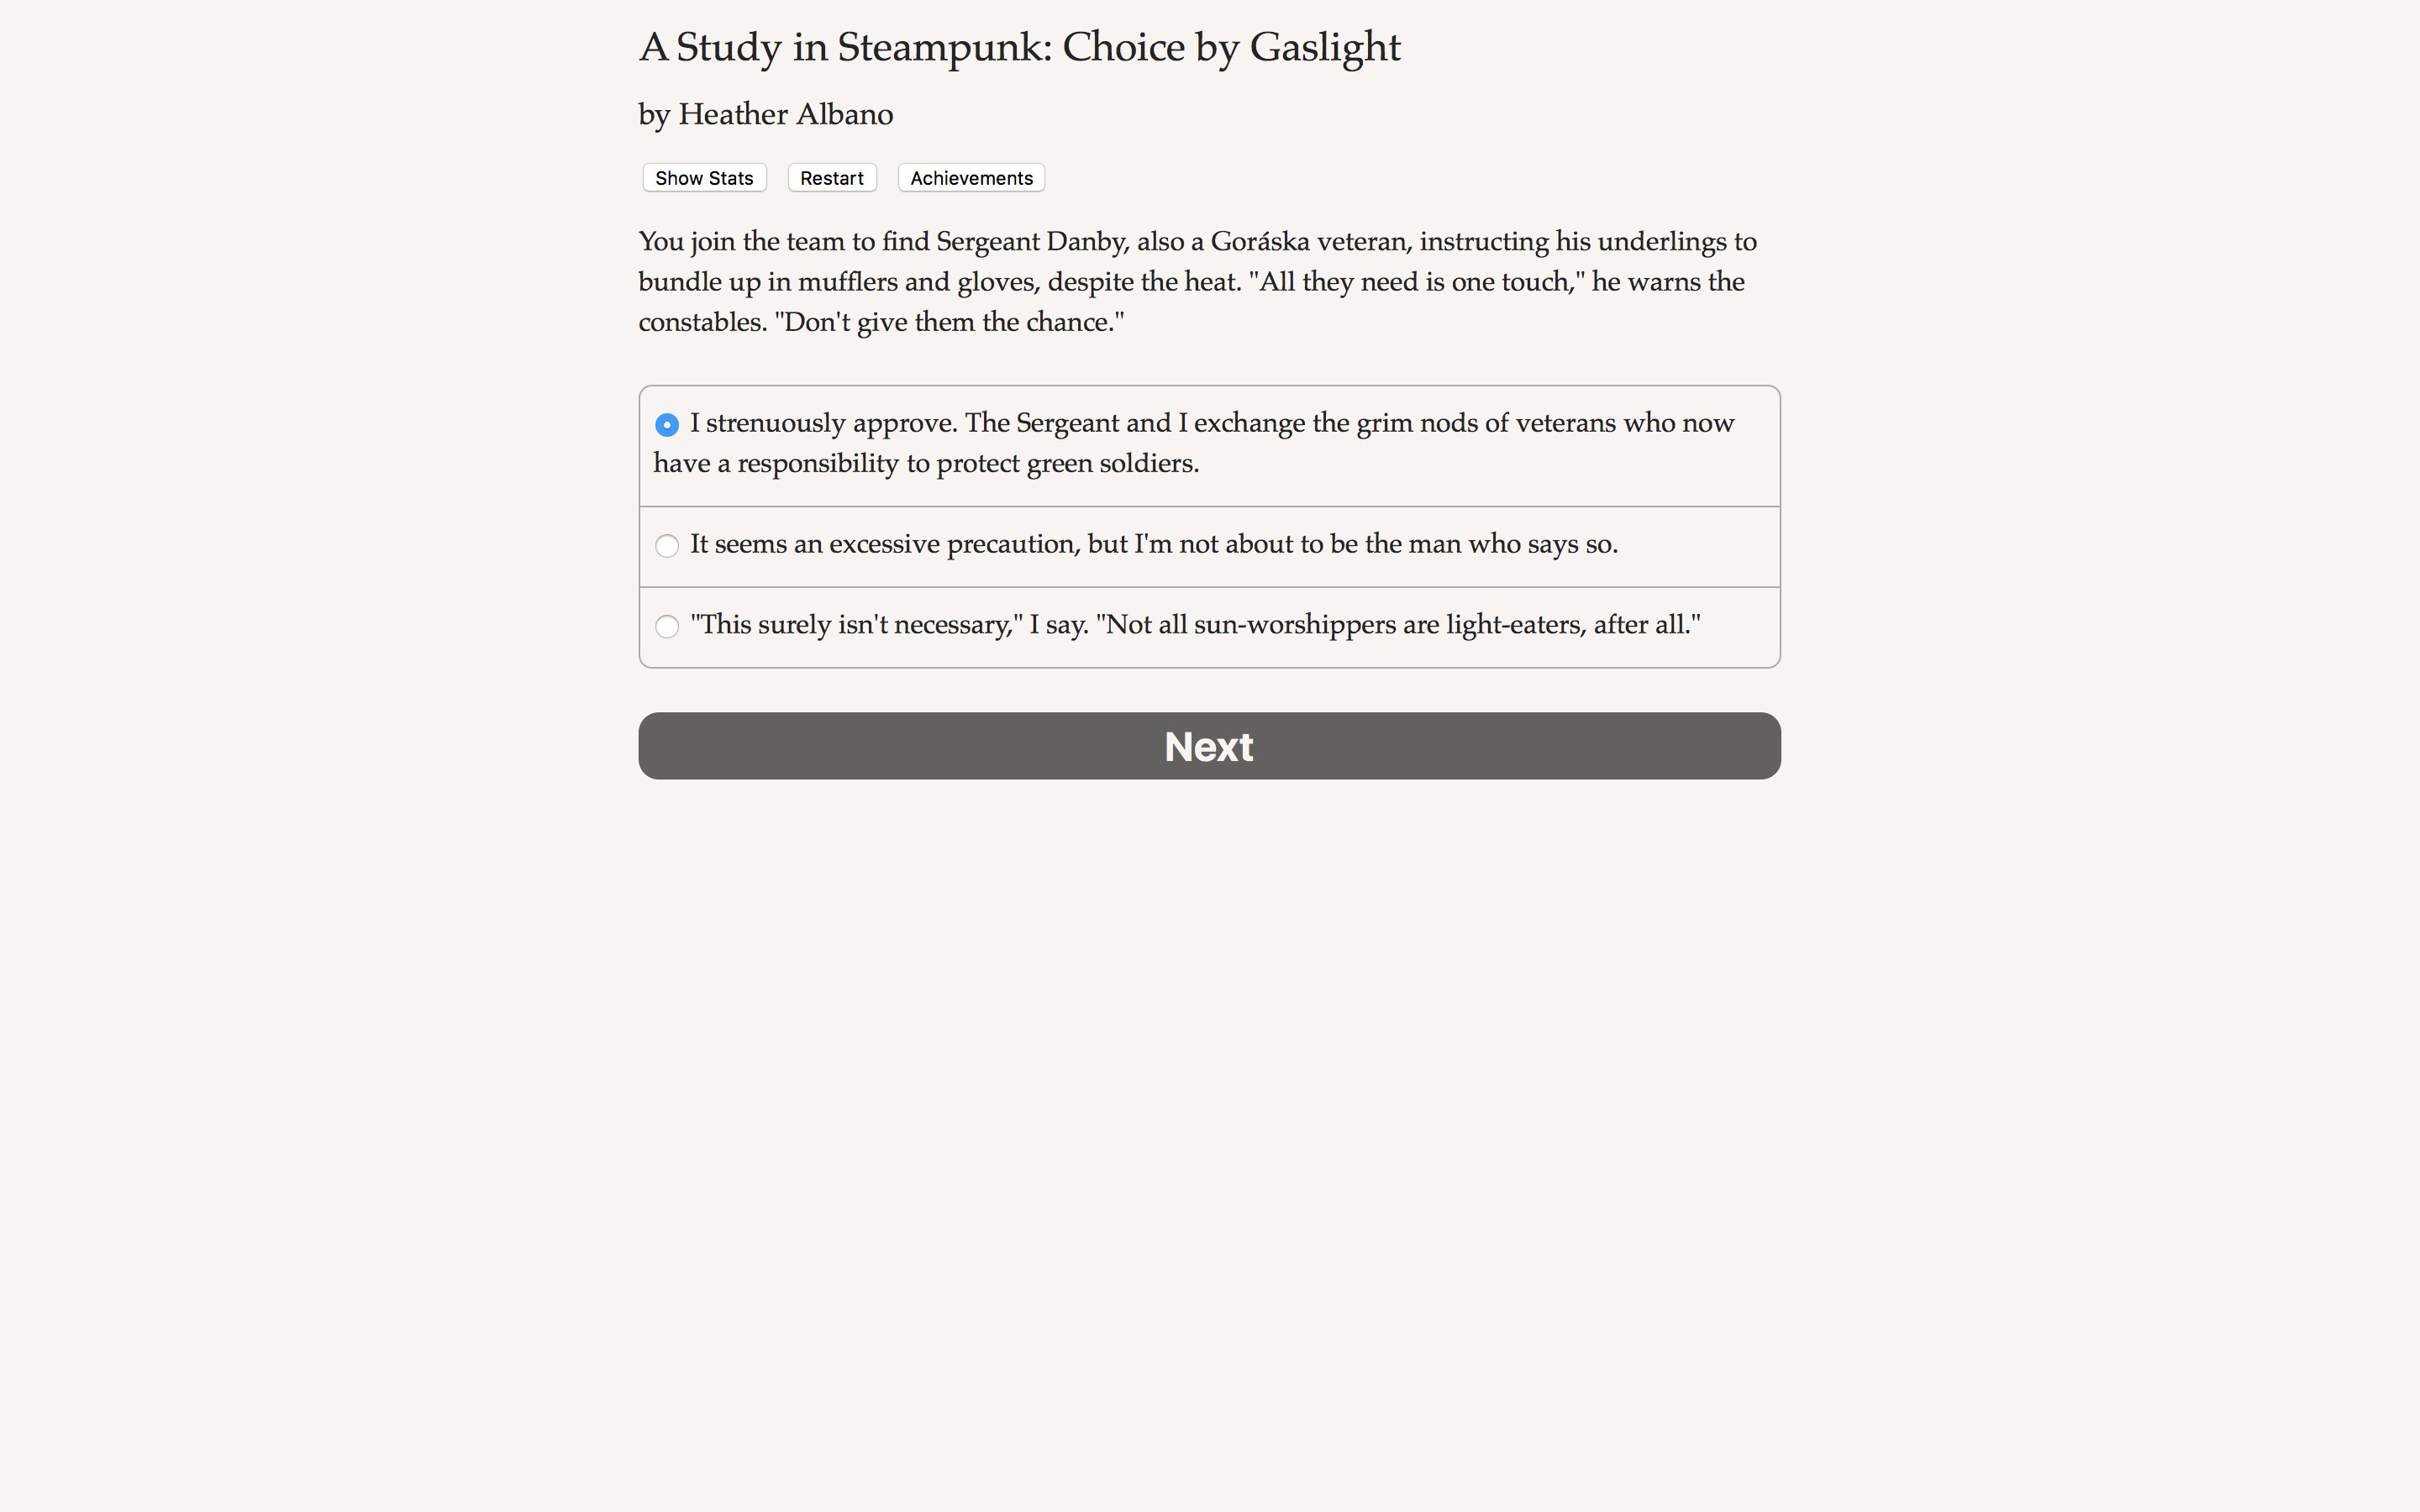 A Study in Steampunk: Choice by Gaslight screenshot